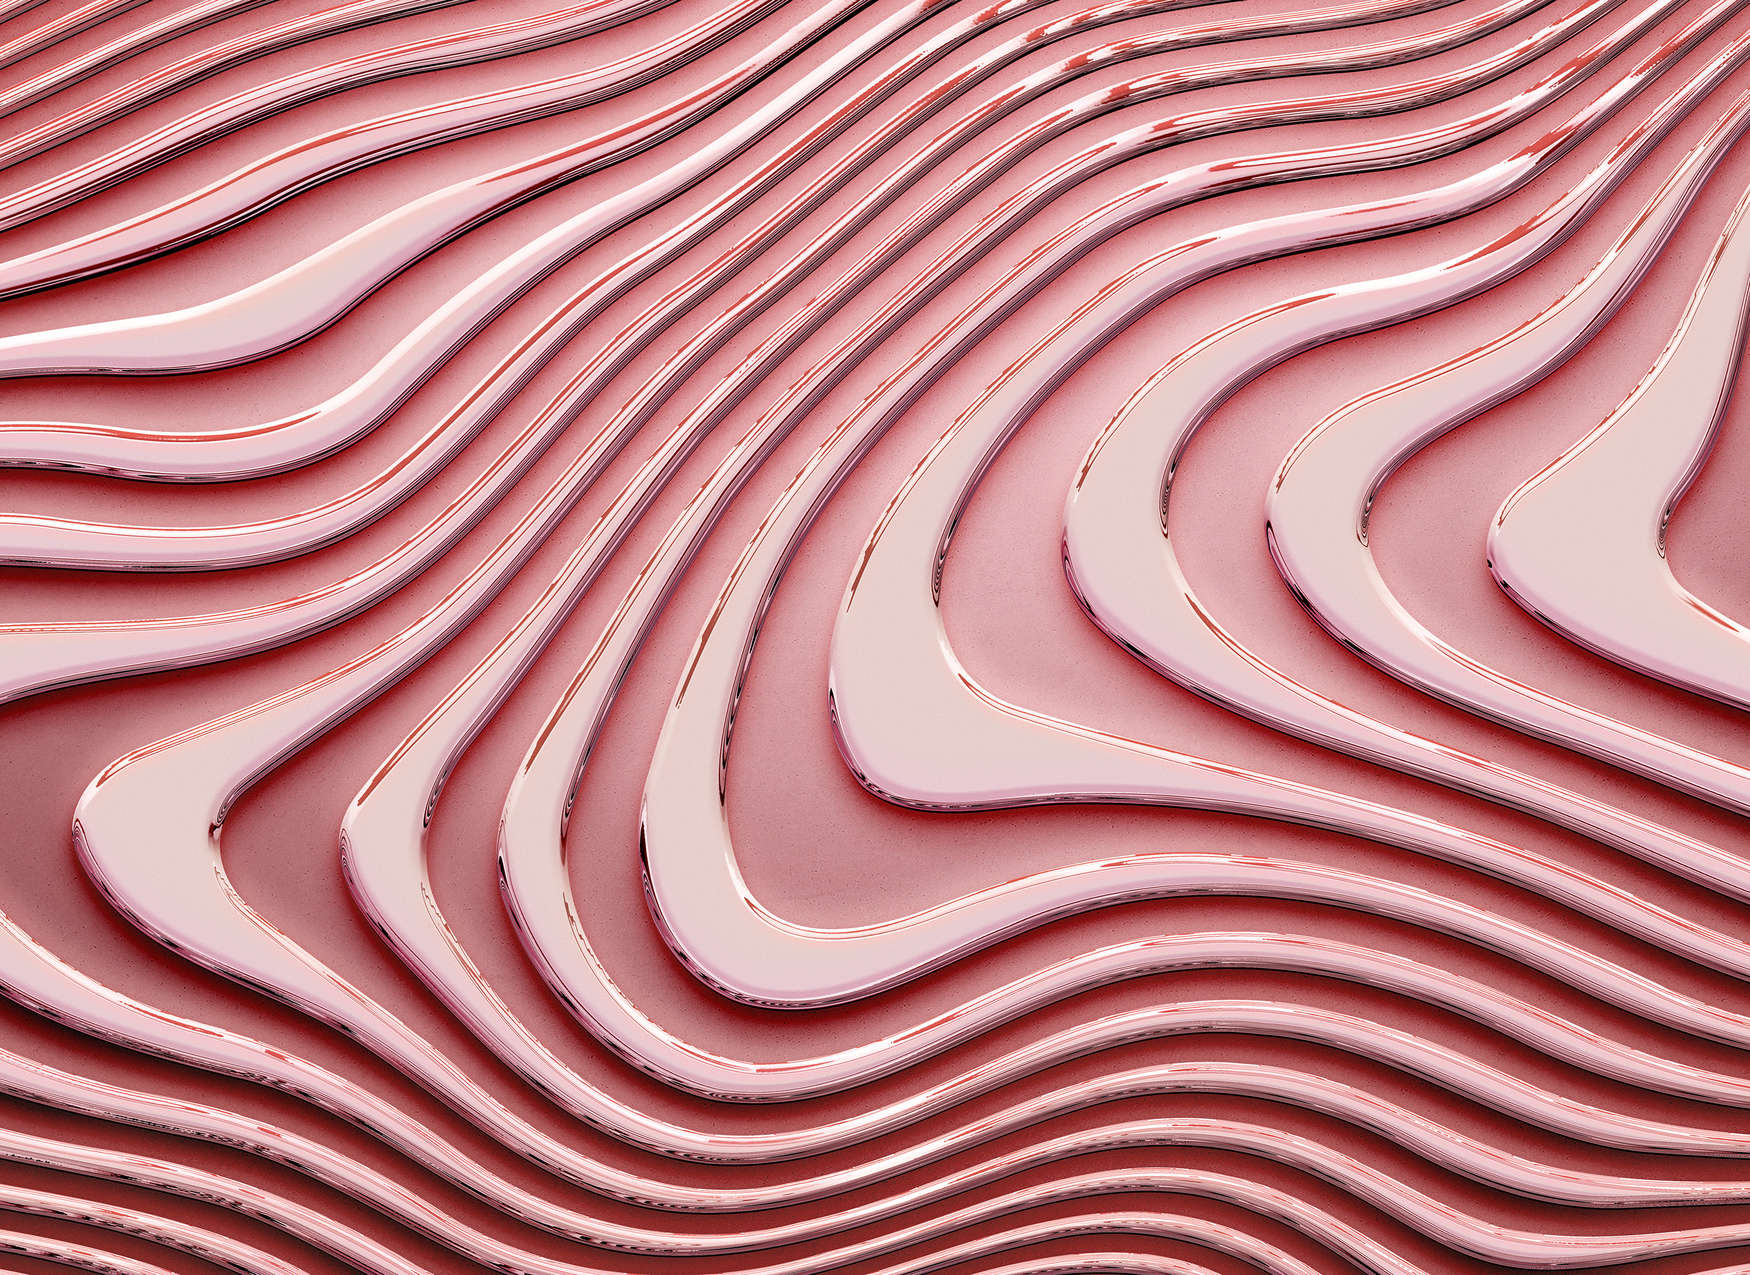             Wavy Lines and Shadows Wallpaper - Pink, Pink
        